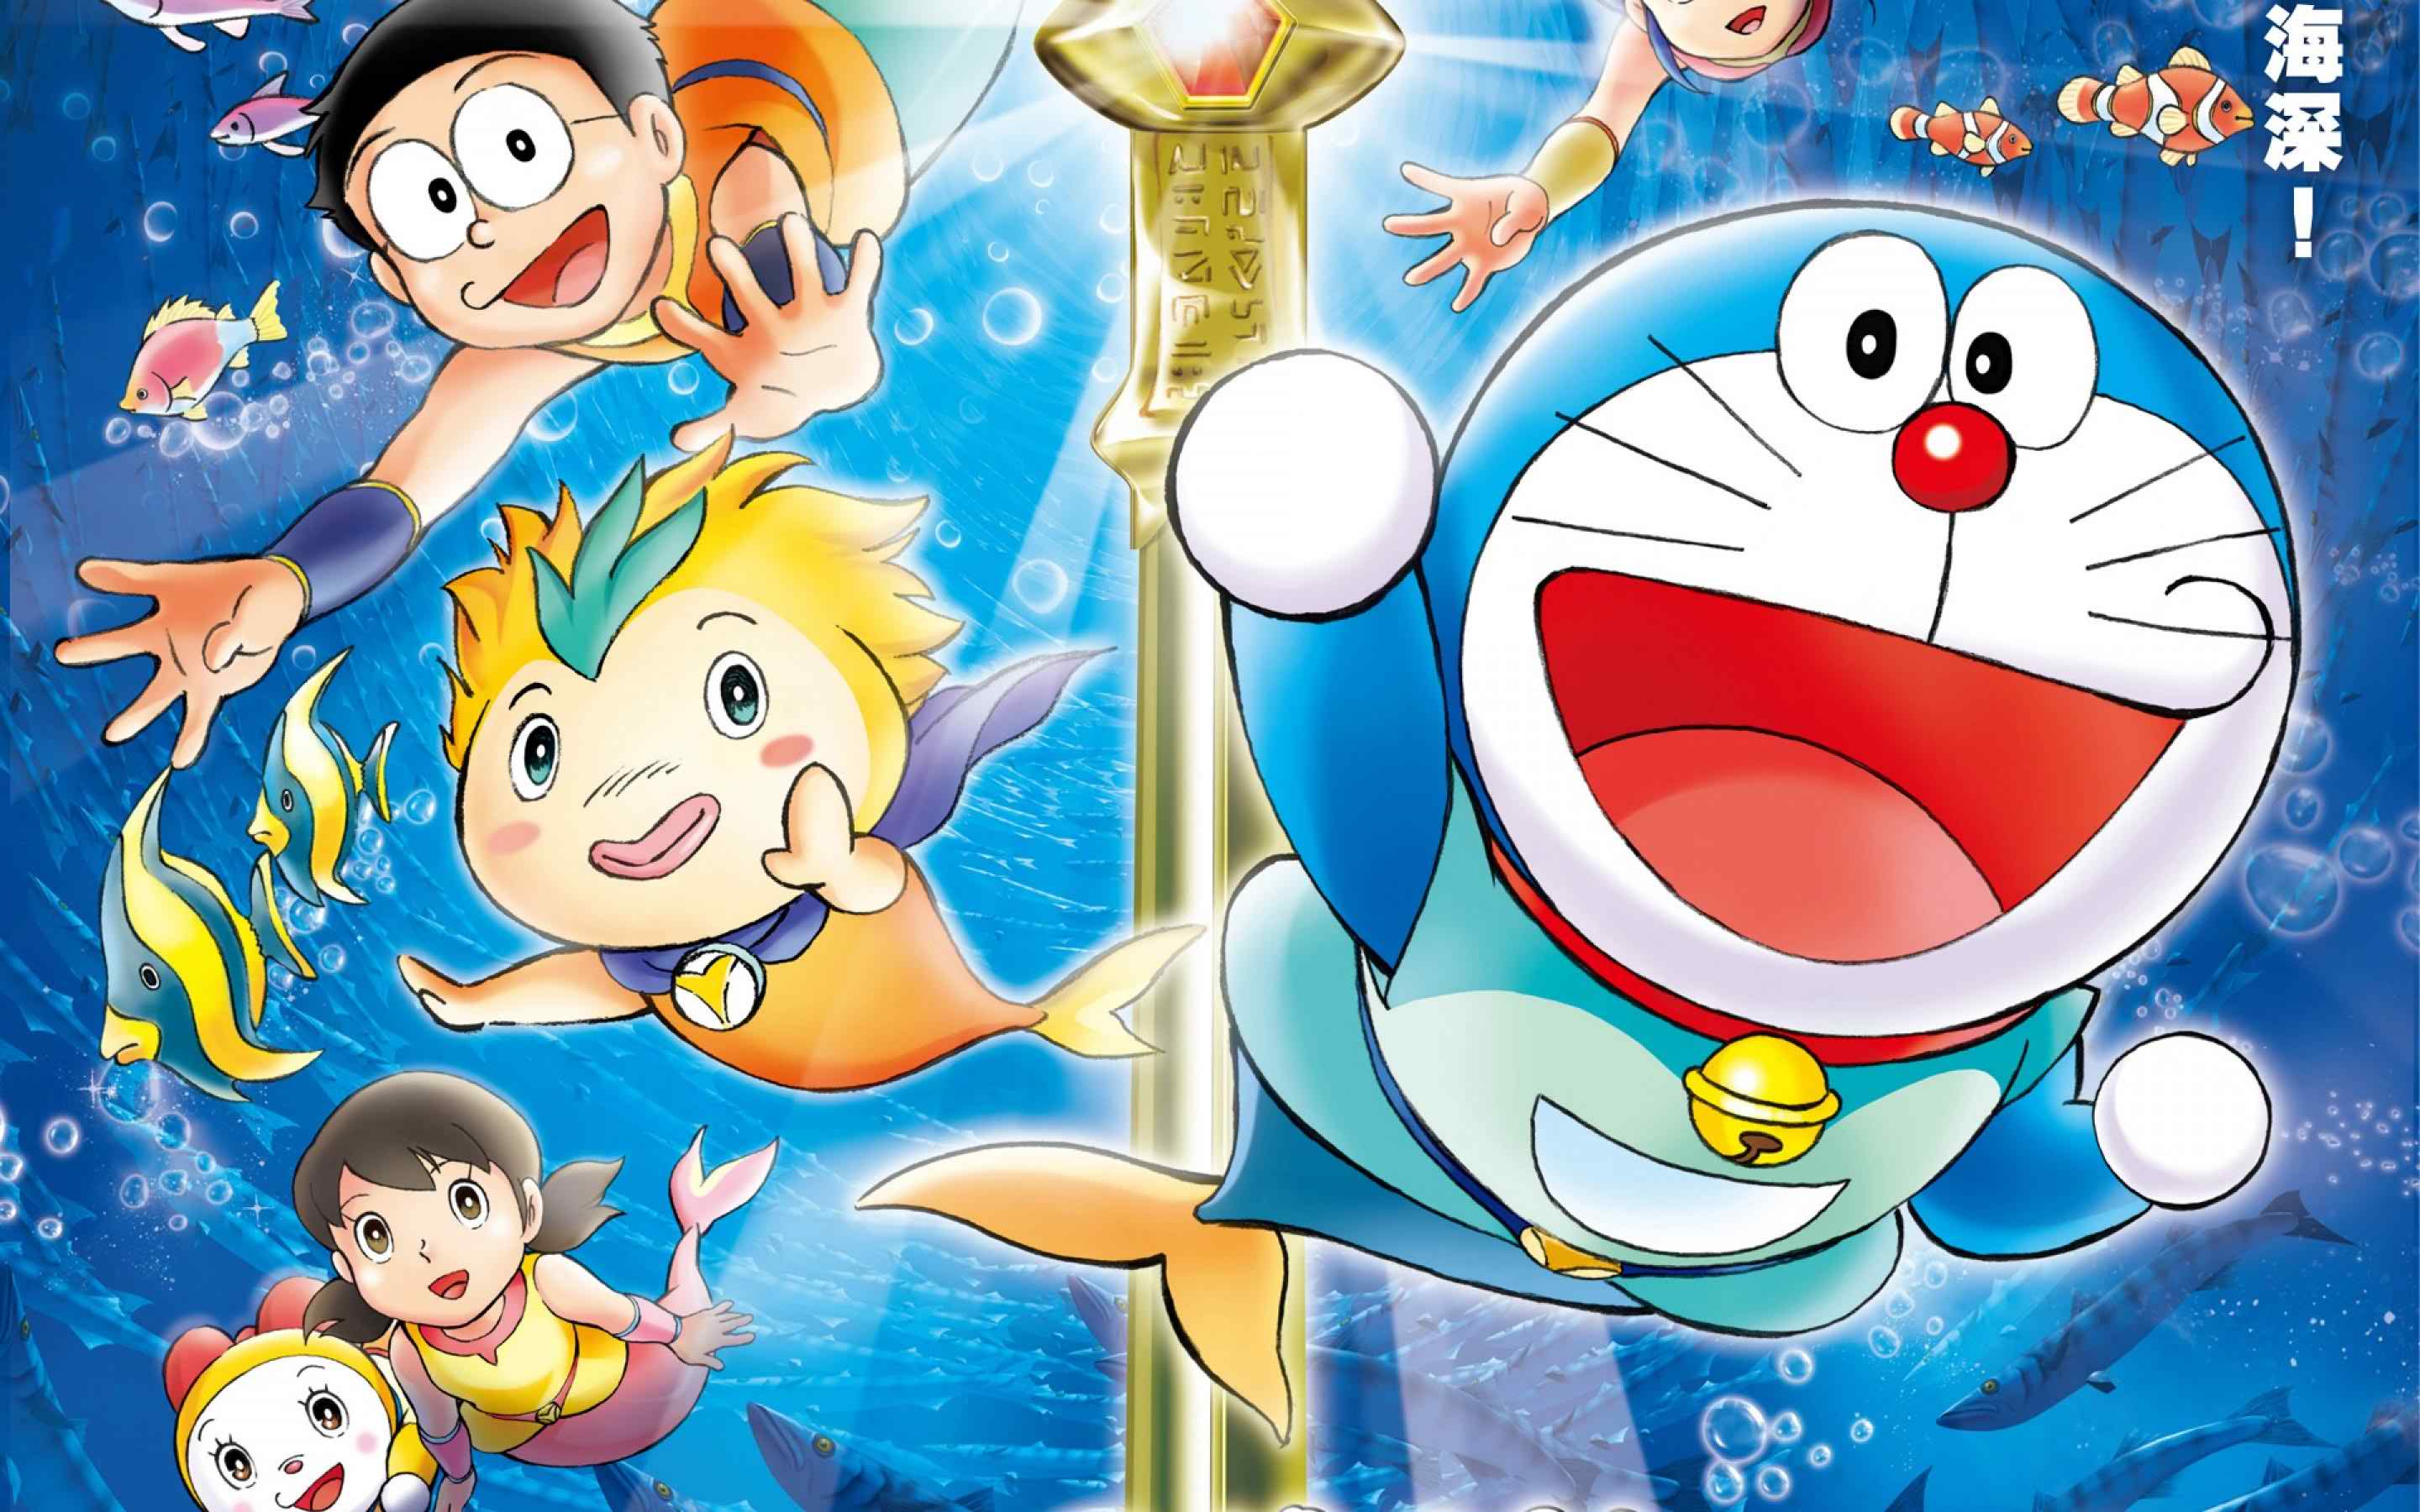 Free Doraemon Desktop Wallpaper Download Toptenpack.com